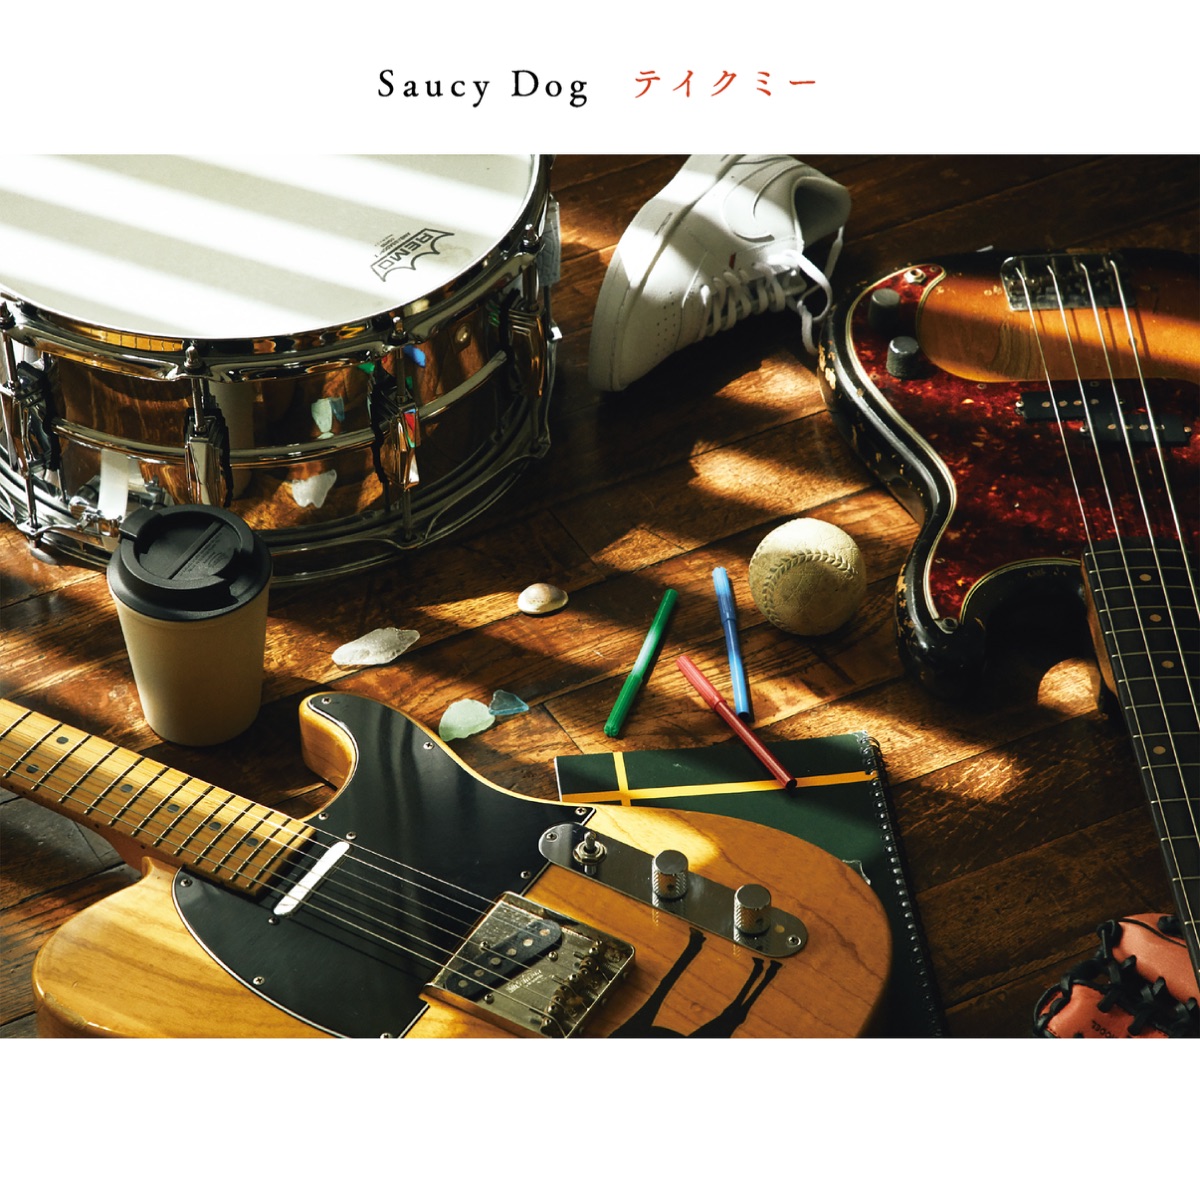 Take Me - Album by Saucy Dog - Apple Music